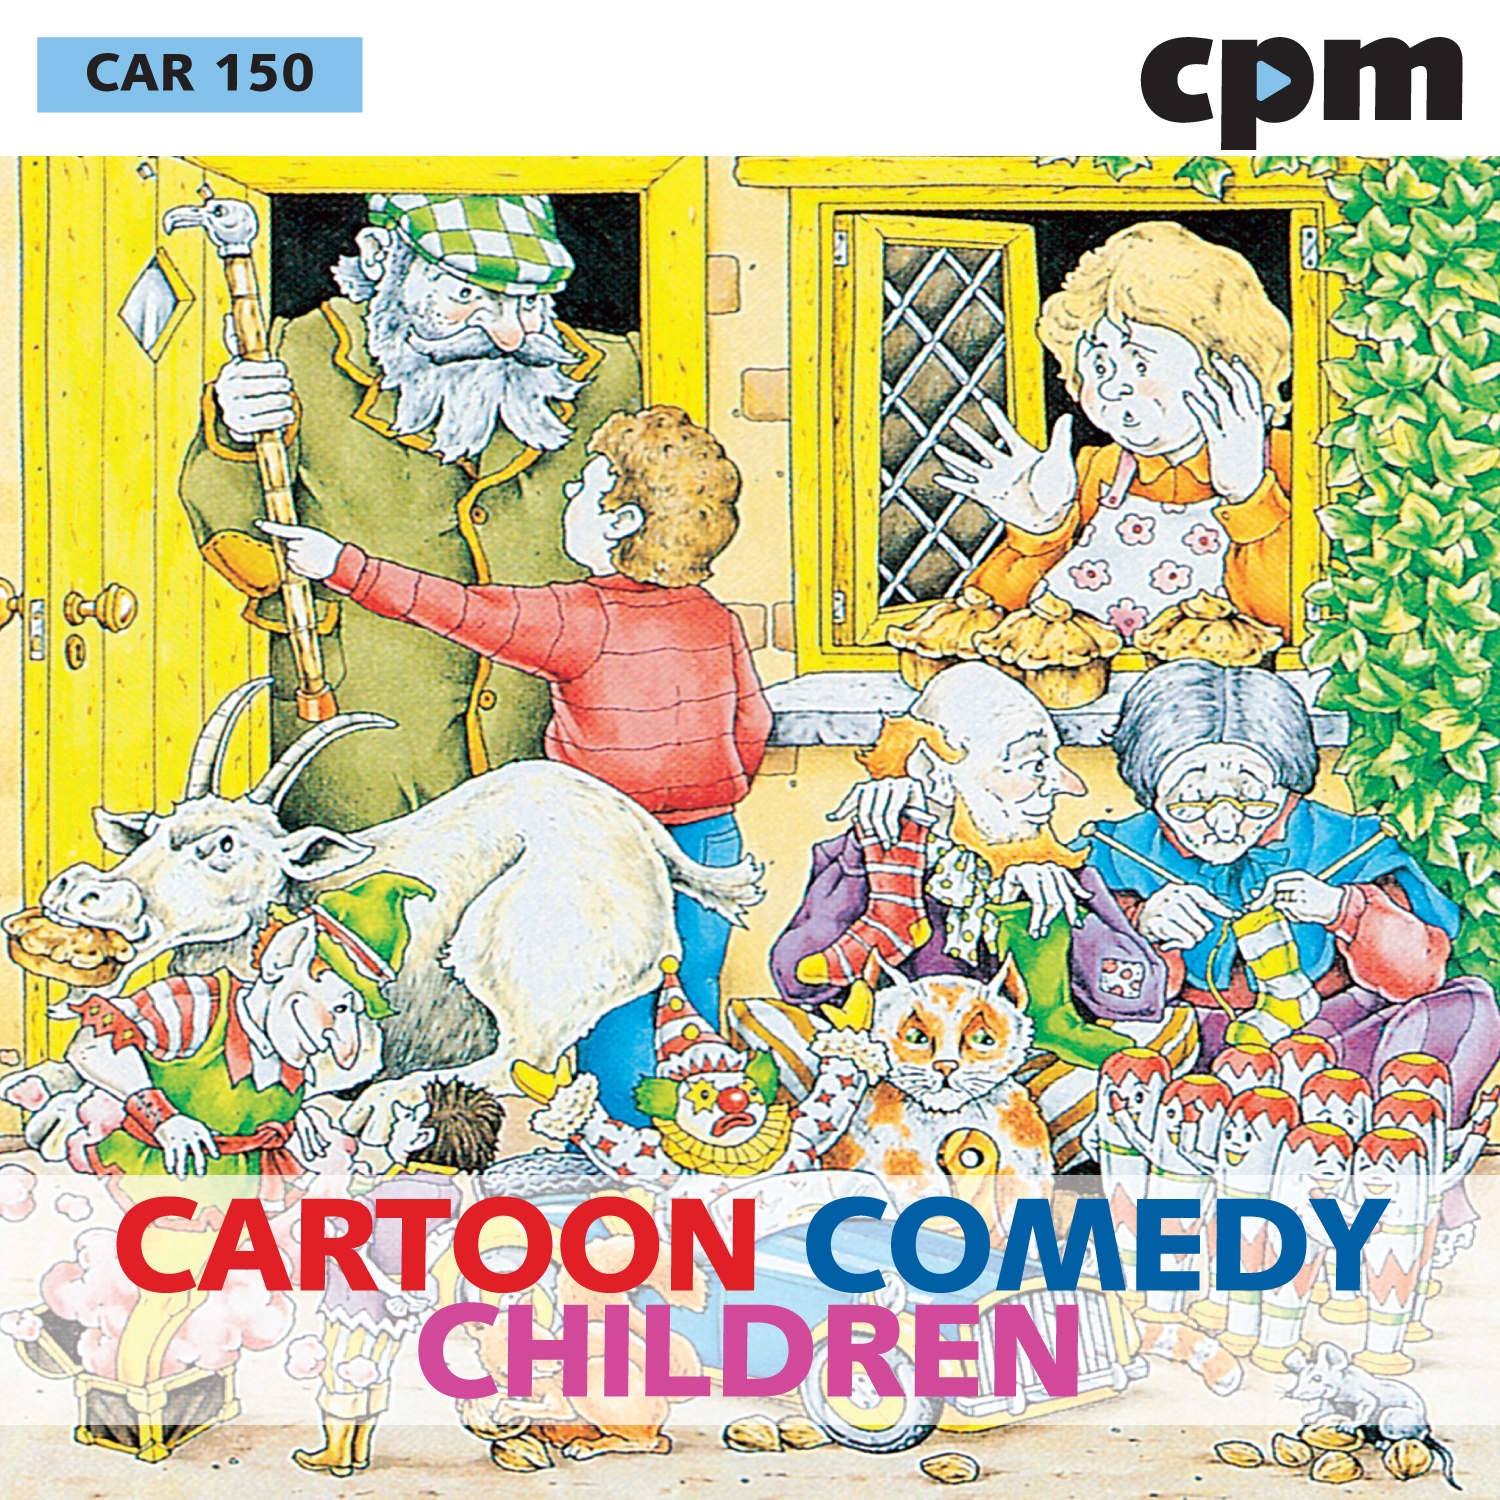 CARTOON / COMEDY / CHILDREN - Warner Chappell Production Music